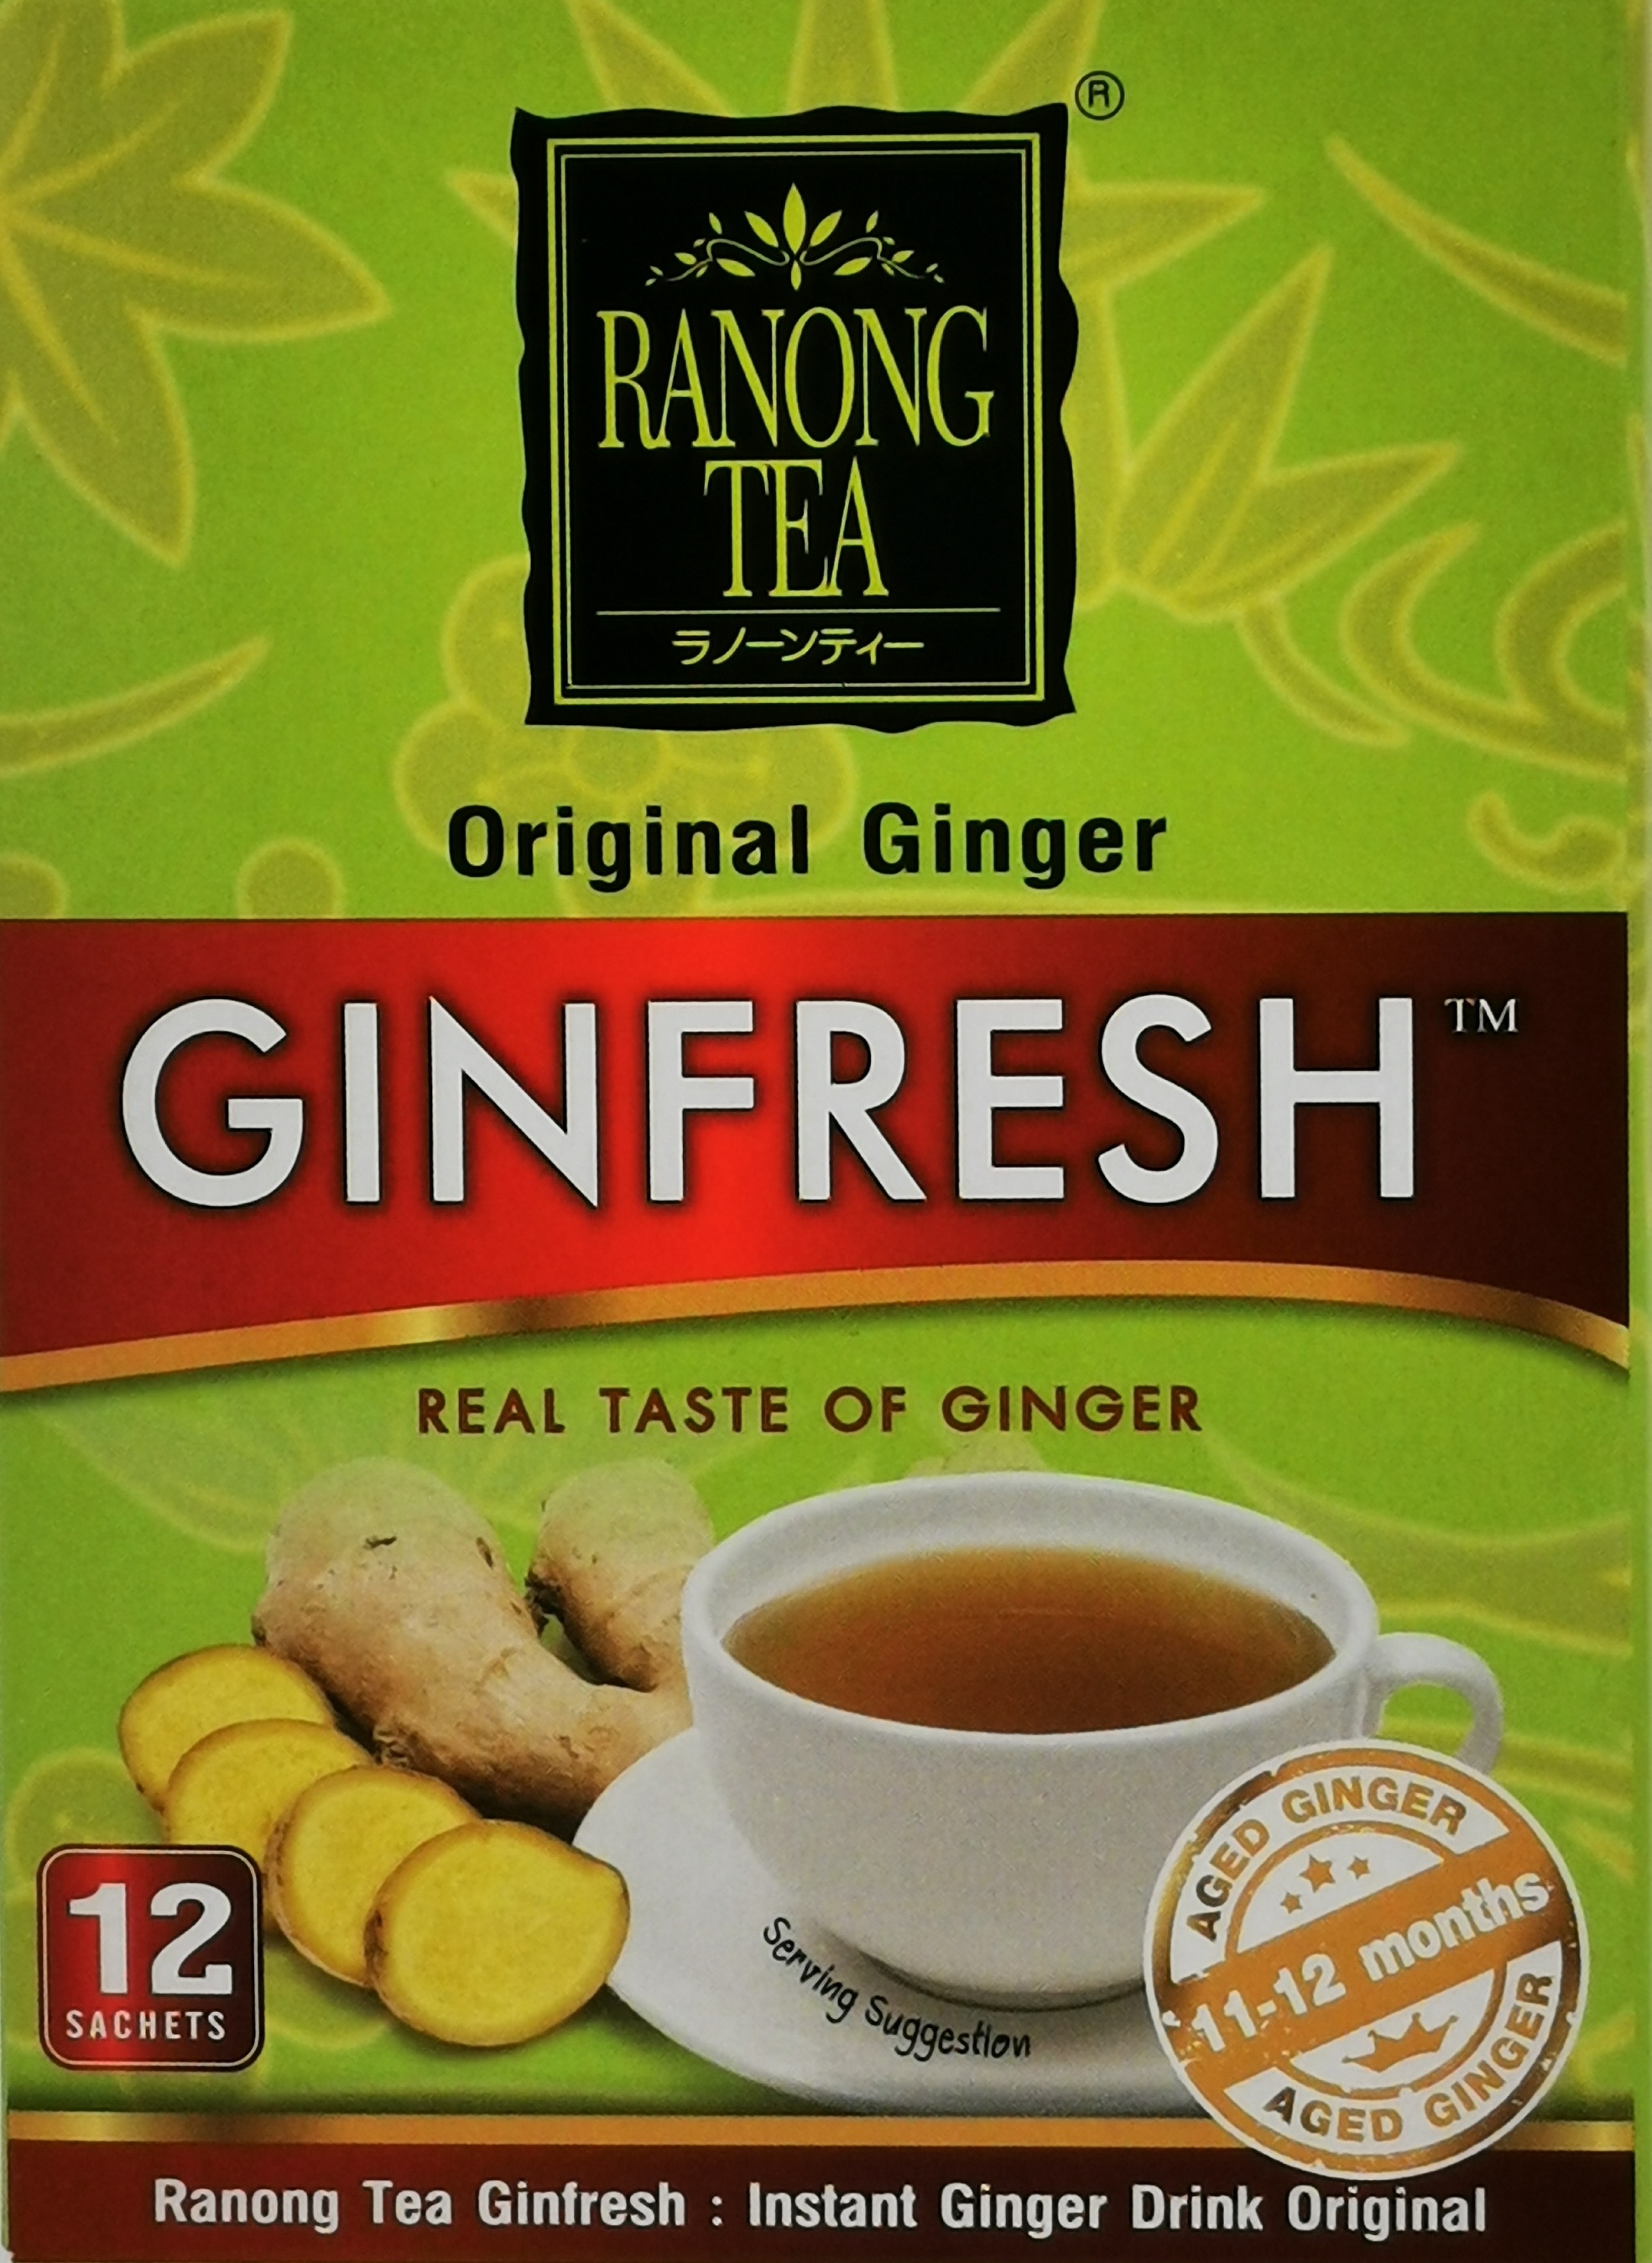 Ranong tea ginfresh instant ginger drink original 180g(12x15g)